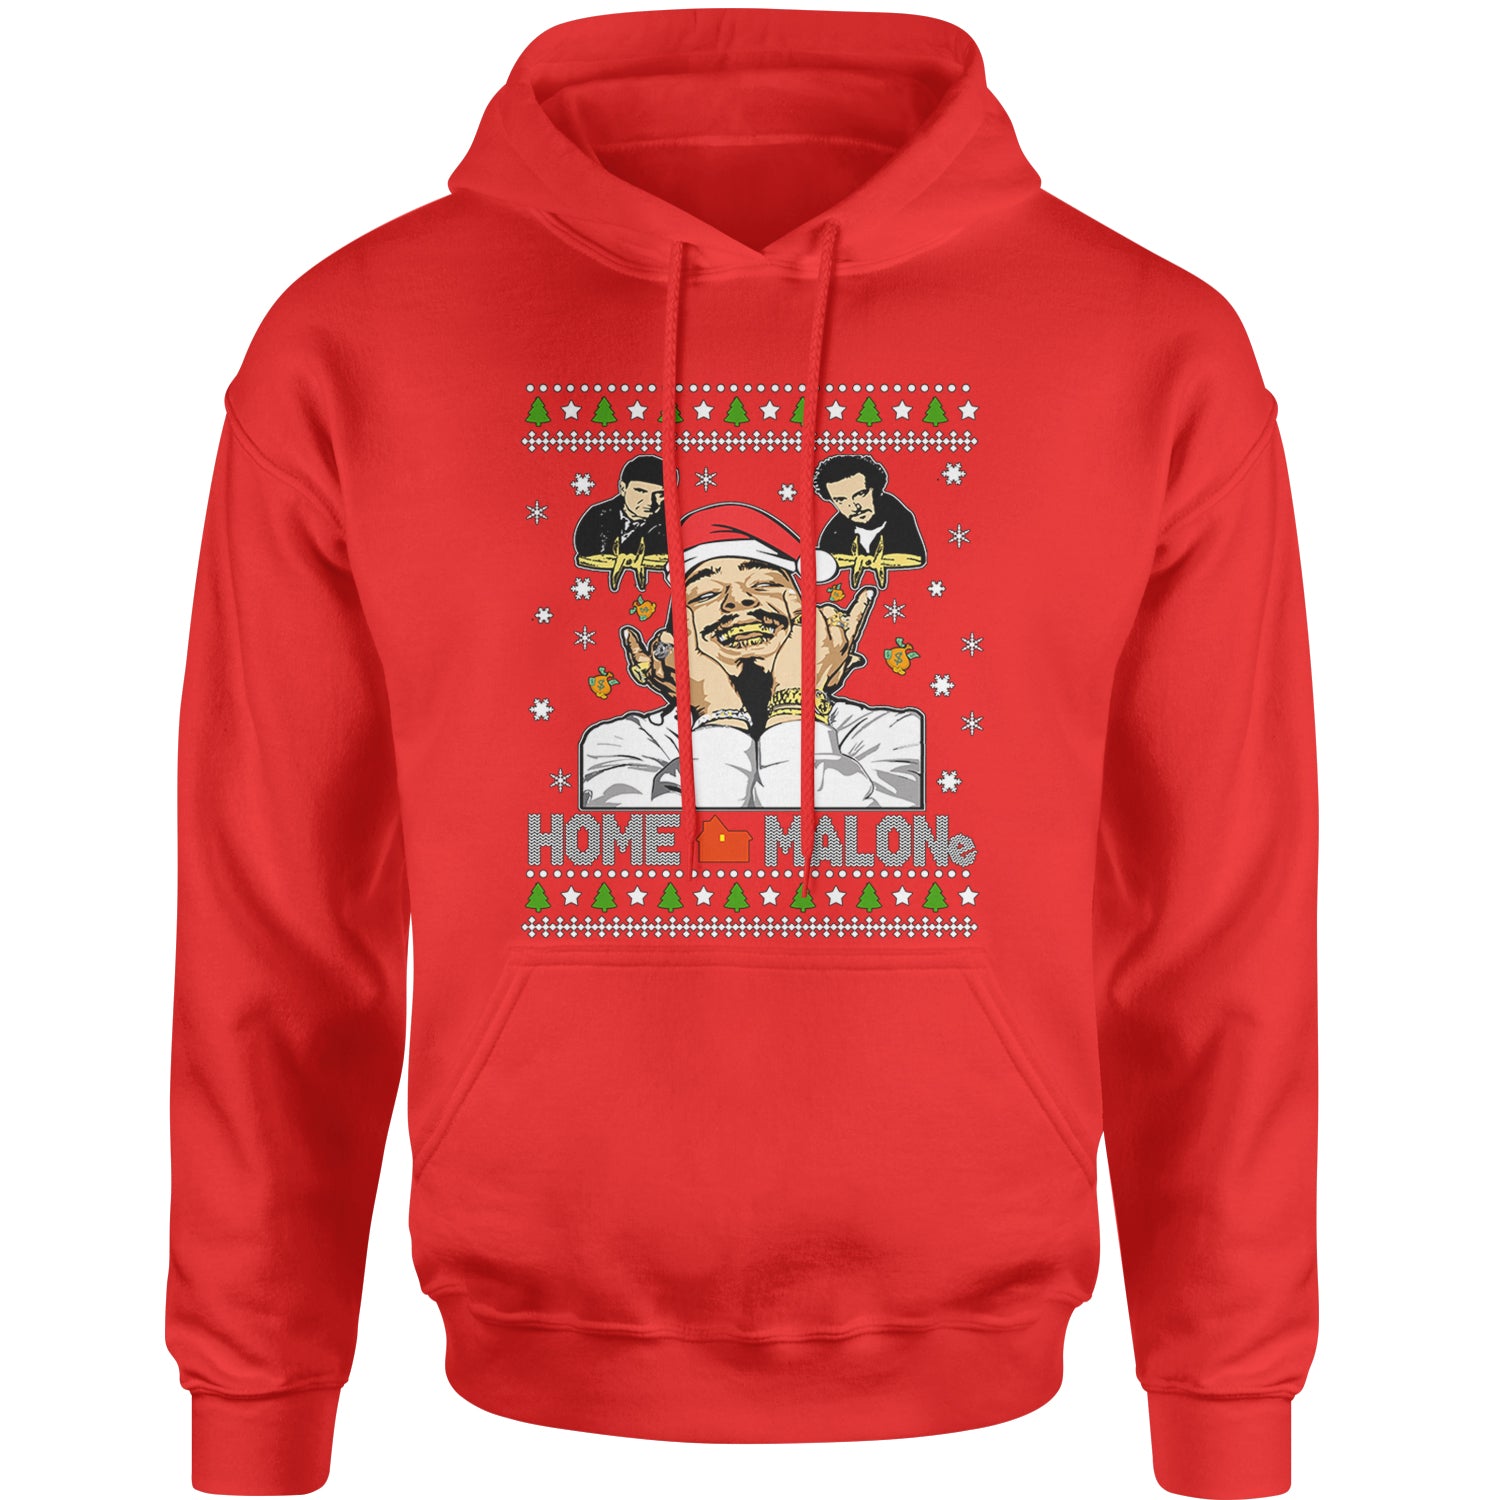 Home Malone Ugly Christmas Adult Hoodie Sweatshirt alone, caulkin, home, malone, mcauley, post by Expression Tees